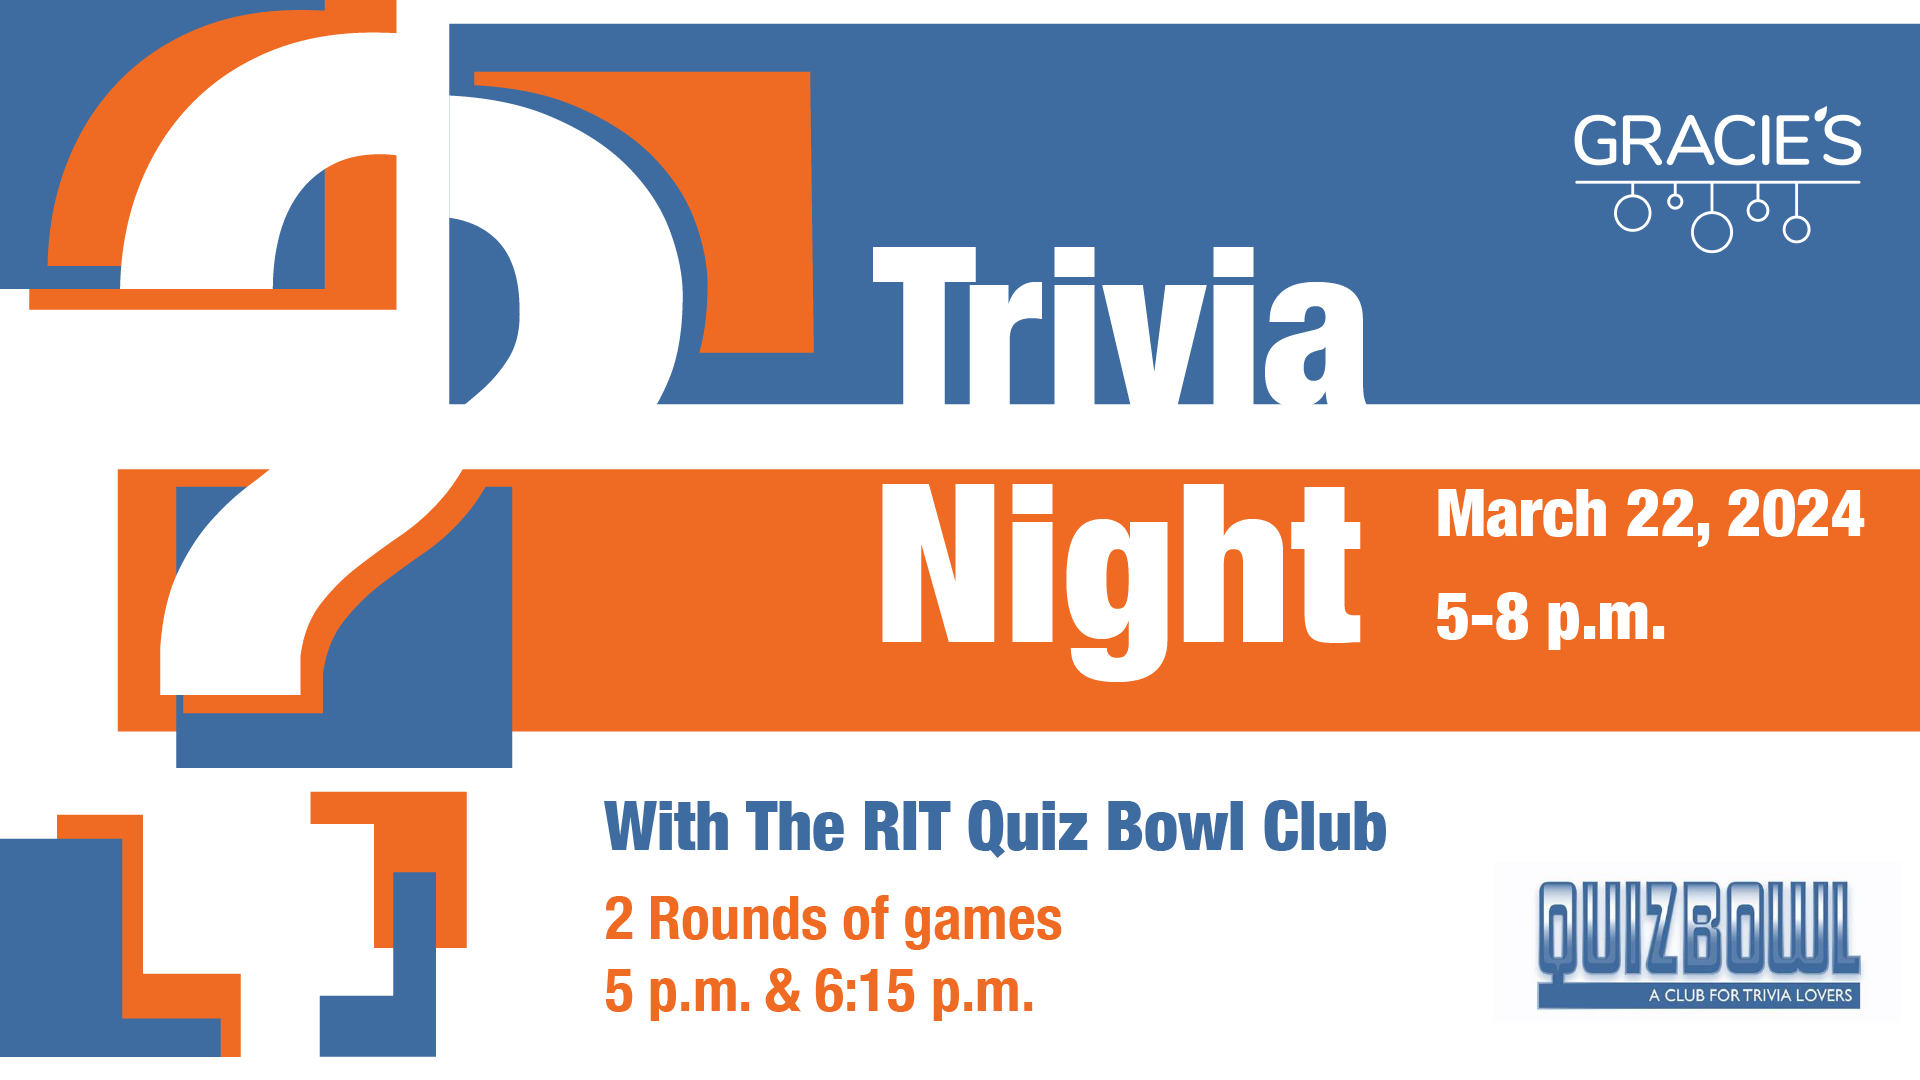 Gracie's Trivia Night with the RIT Quiz Bowl Club